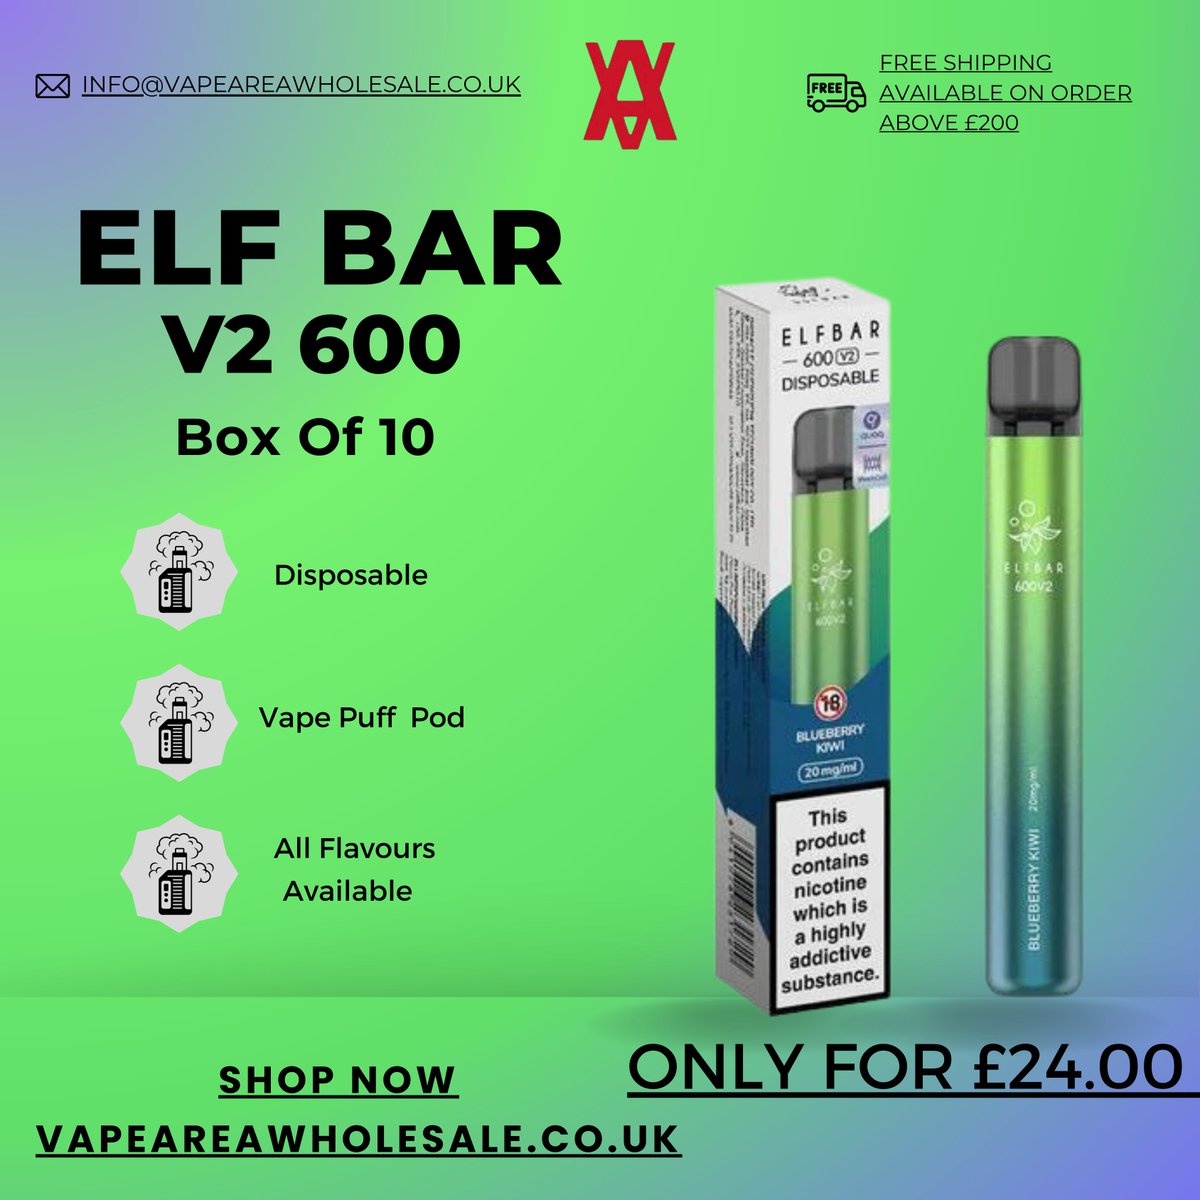 Elf Bar V2 600 Disposable Vape Puff Pod Box of 10
All Flavours Are On Vapeareawholesale.co.uk
#vapeadvocacy #vapeaccessories #vapeuk #vapeeurope #vapepromoter #vapingislife #vapingtricks #vapersofinstagram #vapersworldwide #vapersofinstagram #vapepromoter #vapestore #vapeshop